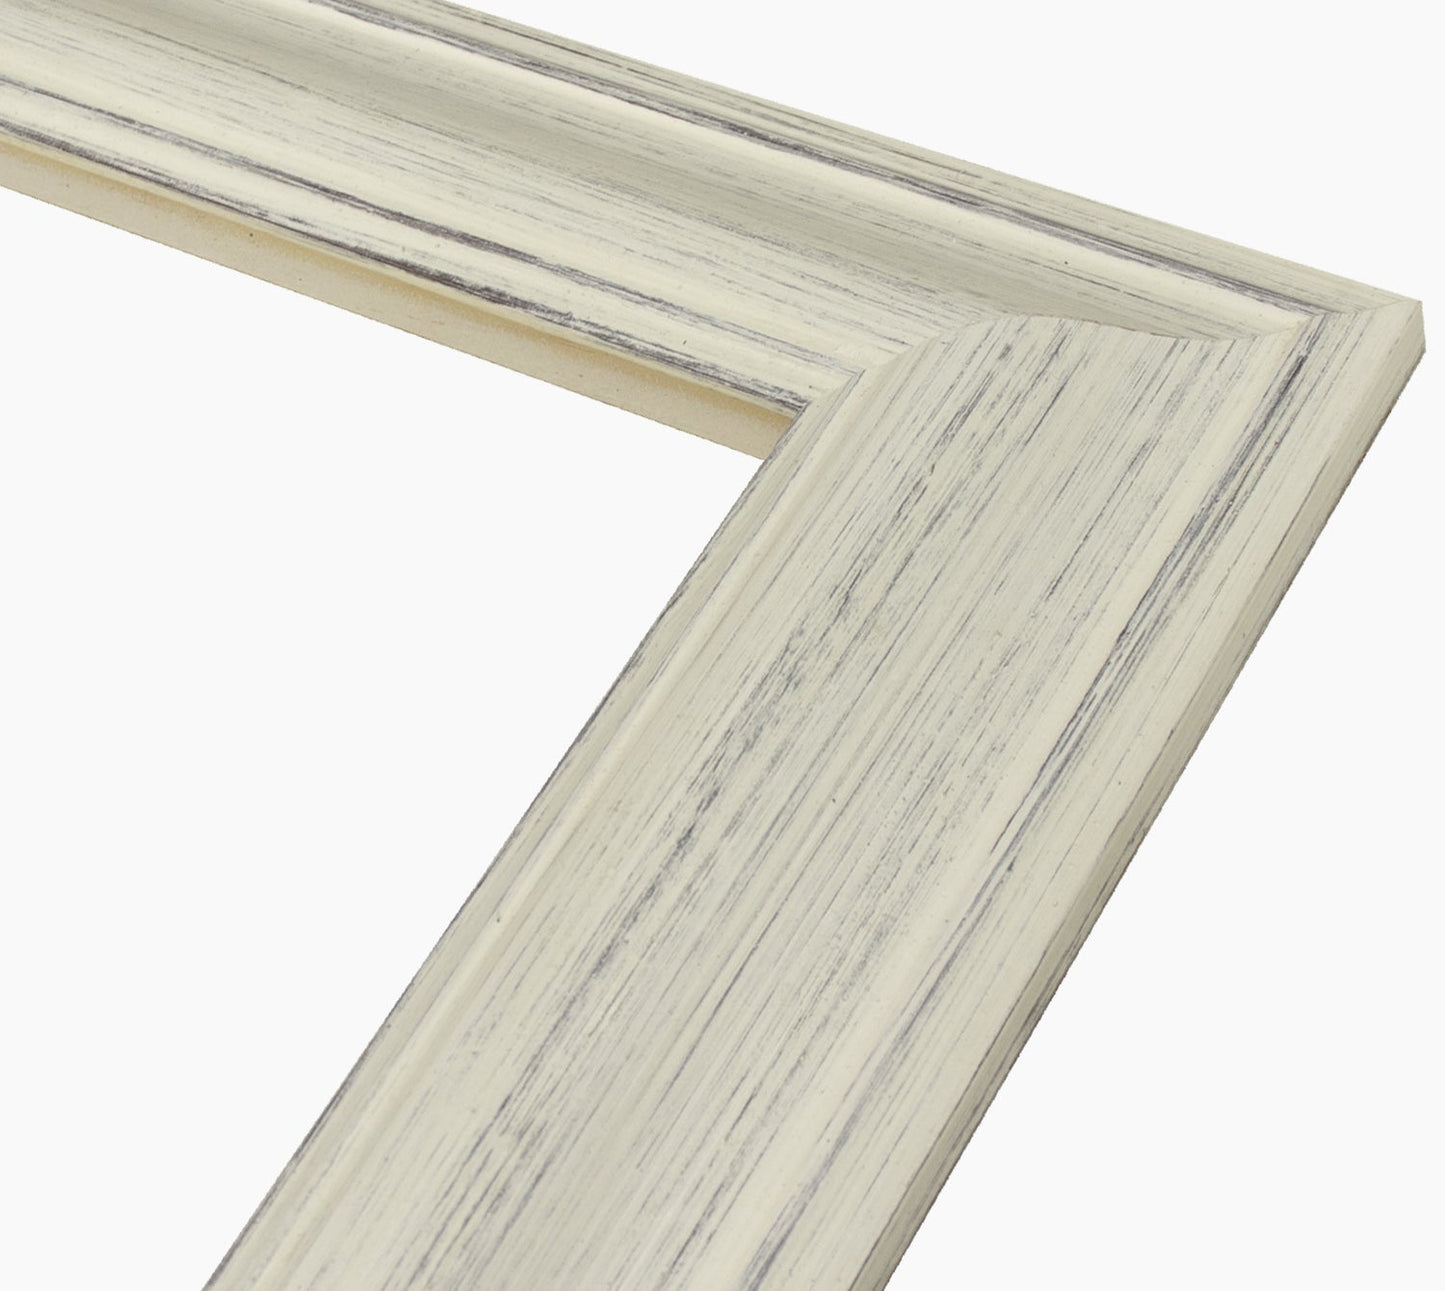 628.920 cadre en bois blanc avec fond marron mesure de profil 60x37 mm Lombarda cornici S.n.c.